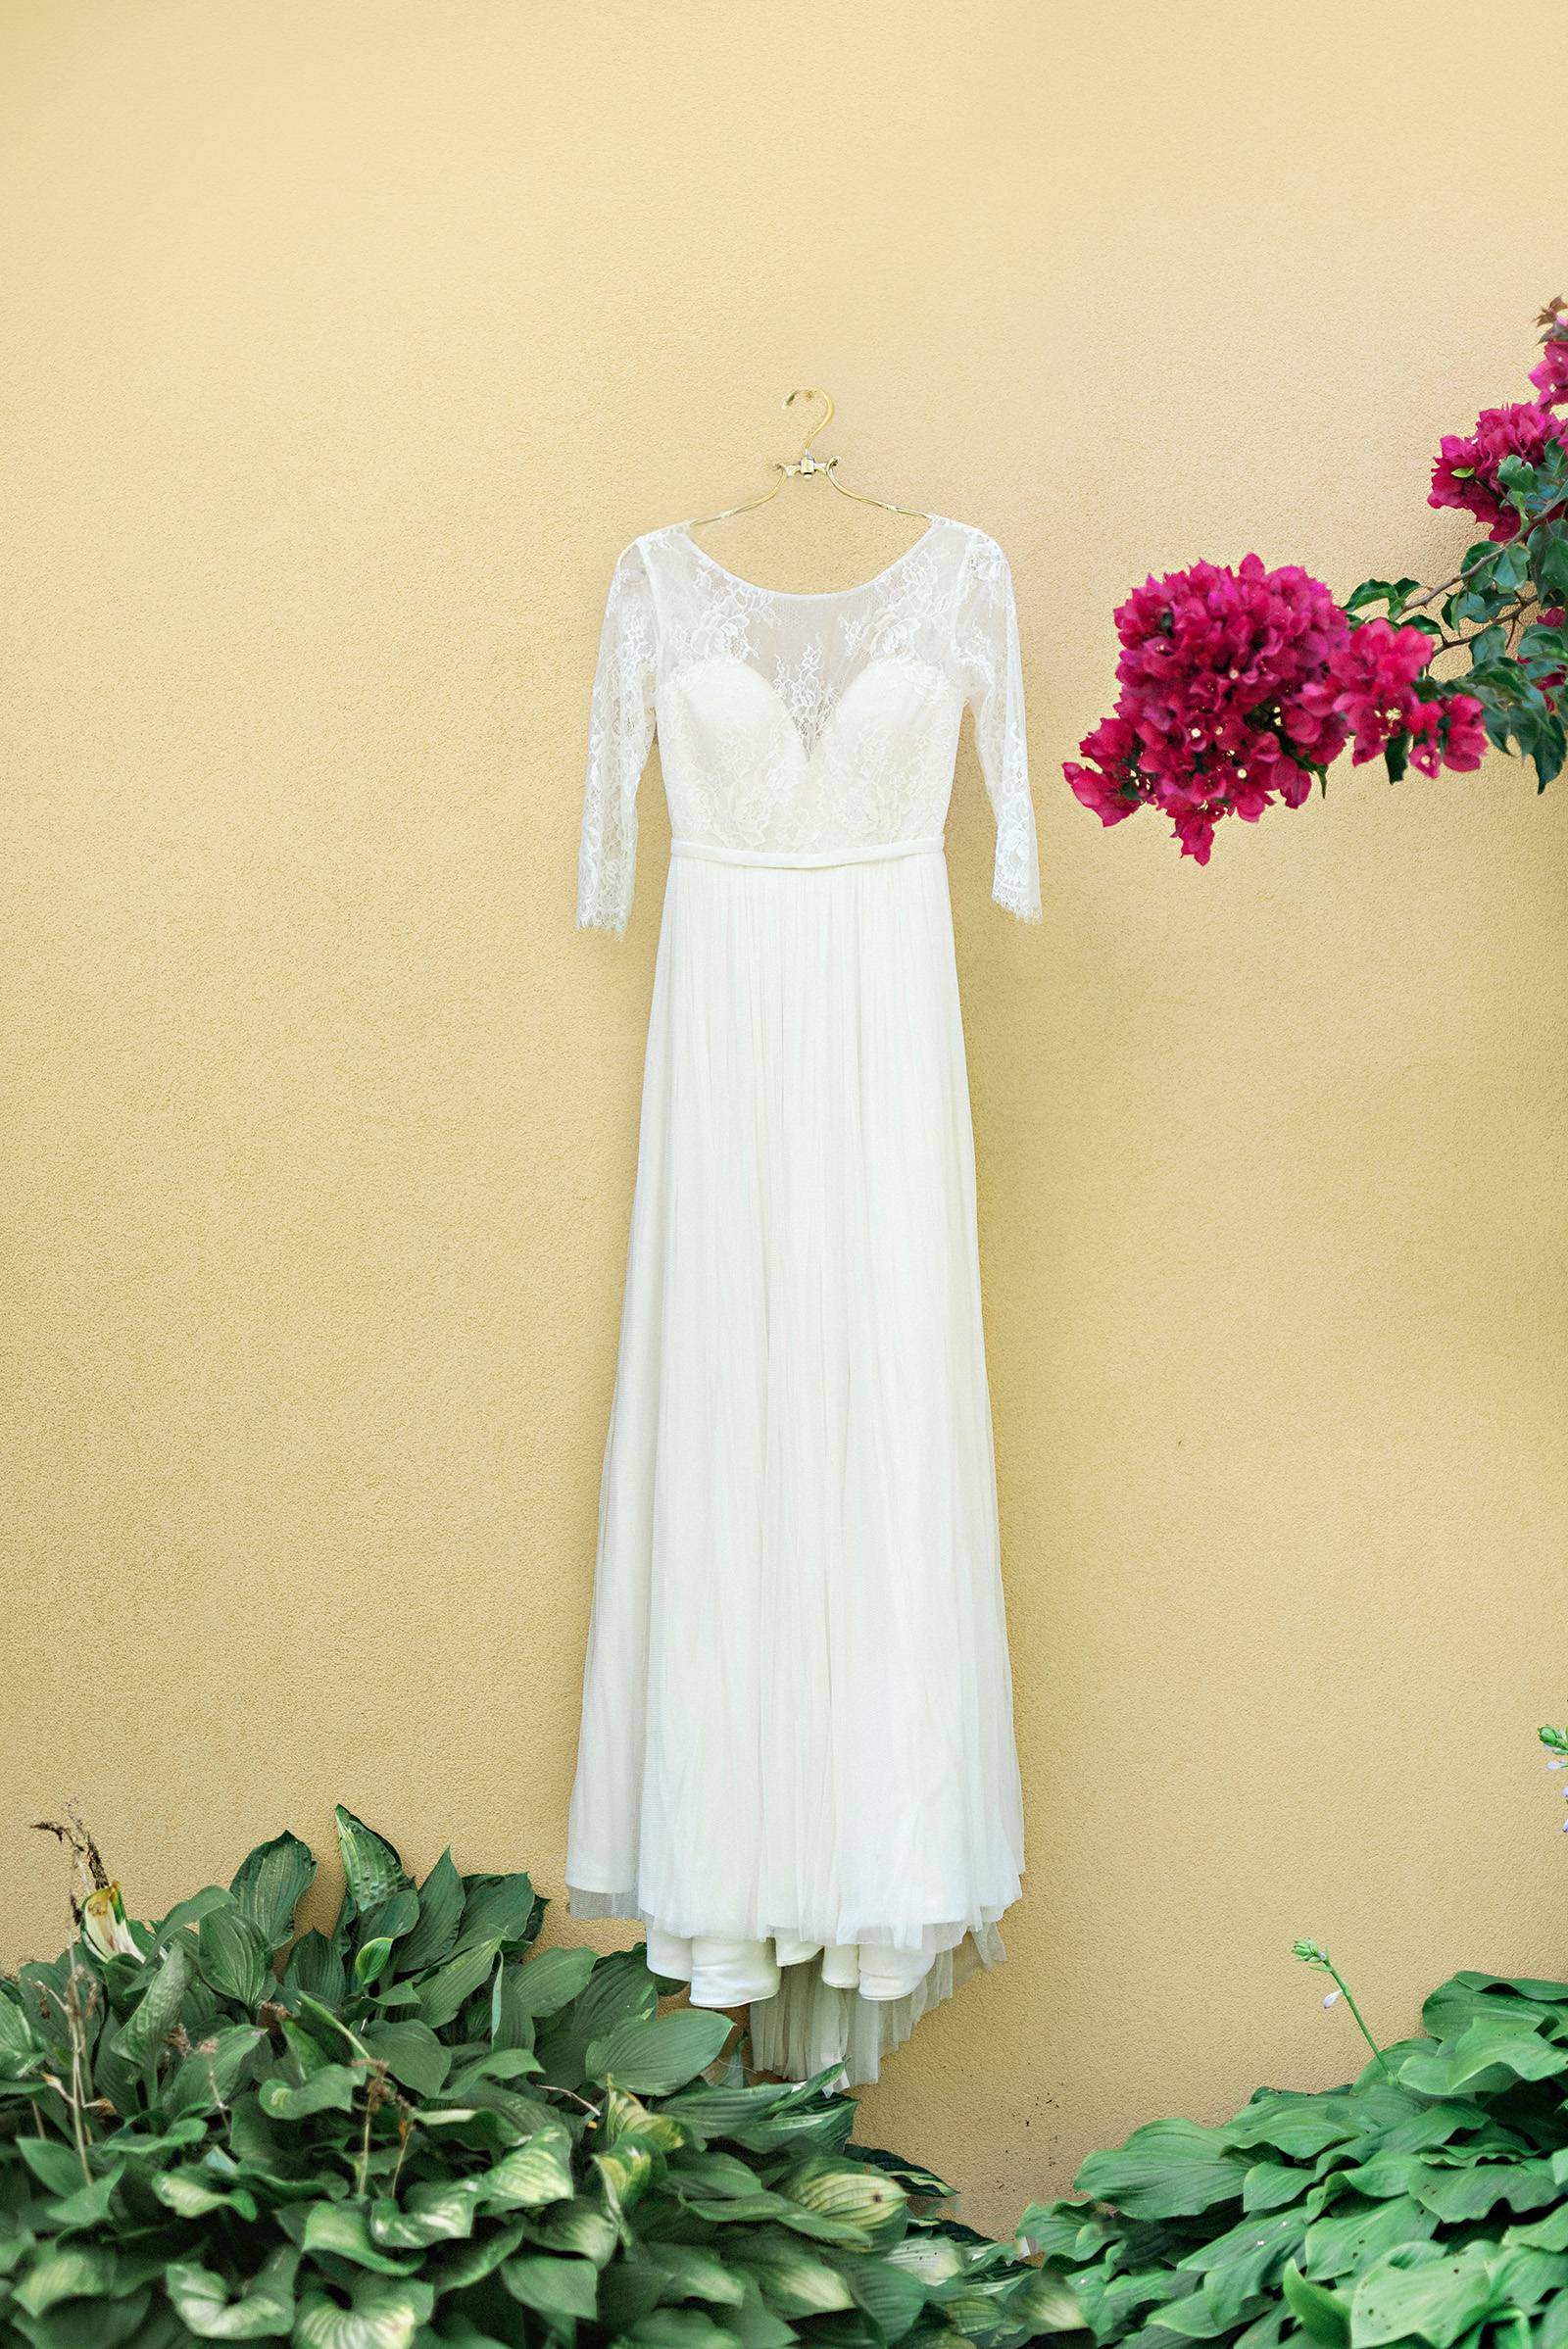 Peony Bridesmaid Dress at Revelry | Skylar Tulle Skirt | Made to Order Peony